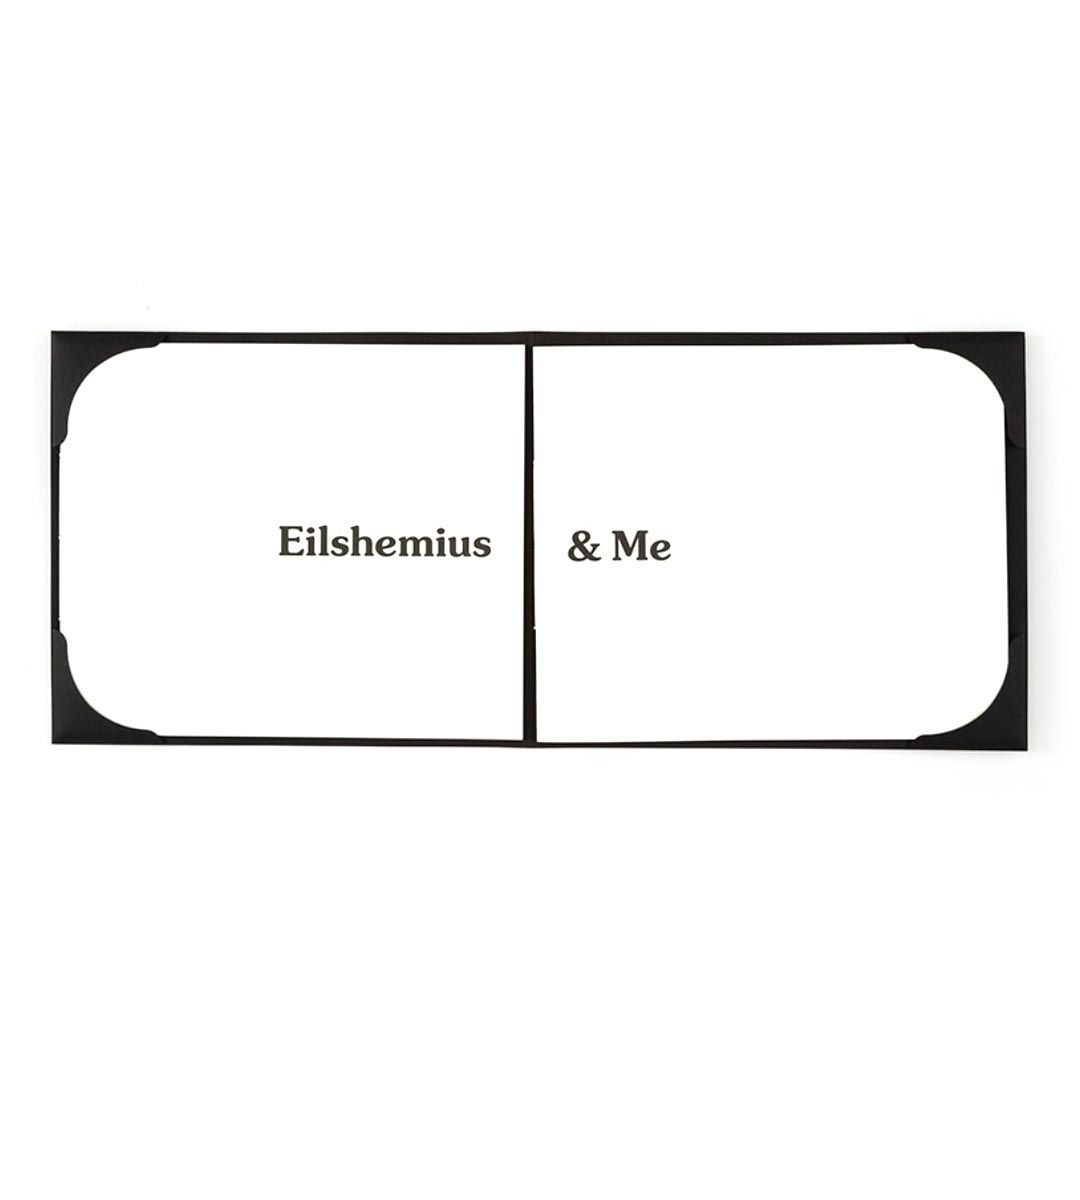 Ed Ruscha : Eilshemius & me